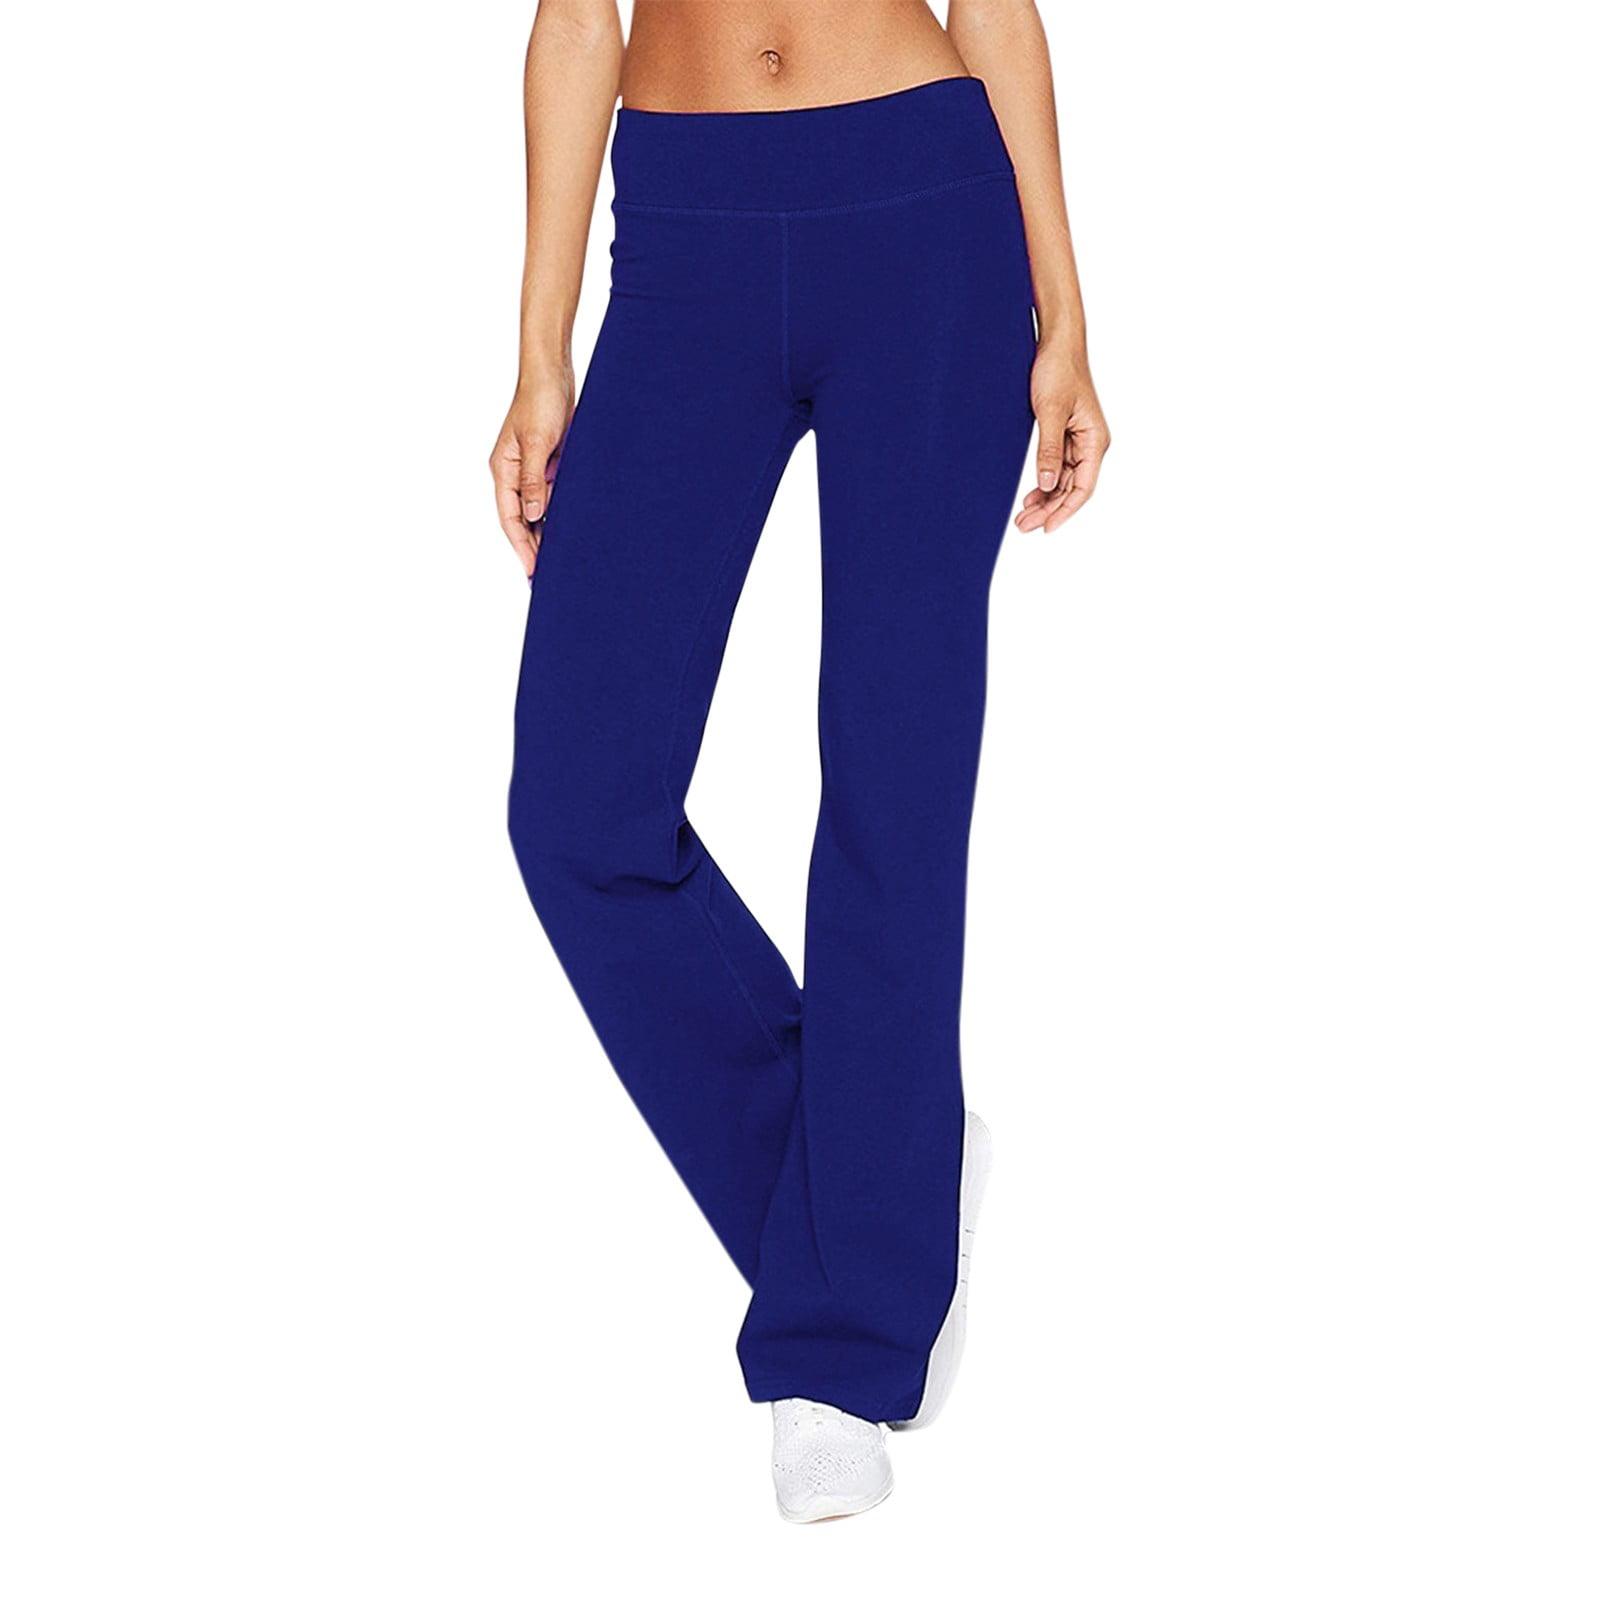 adviicd Yoga Pants For Girls Cotton Yoga Pants For Women Women's Naked  Feeling Workout Leggings High Waist Yoga Tight Pants Blue L 